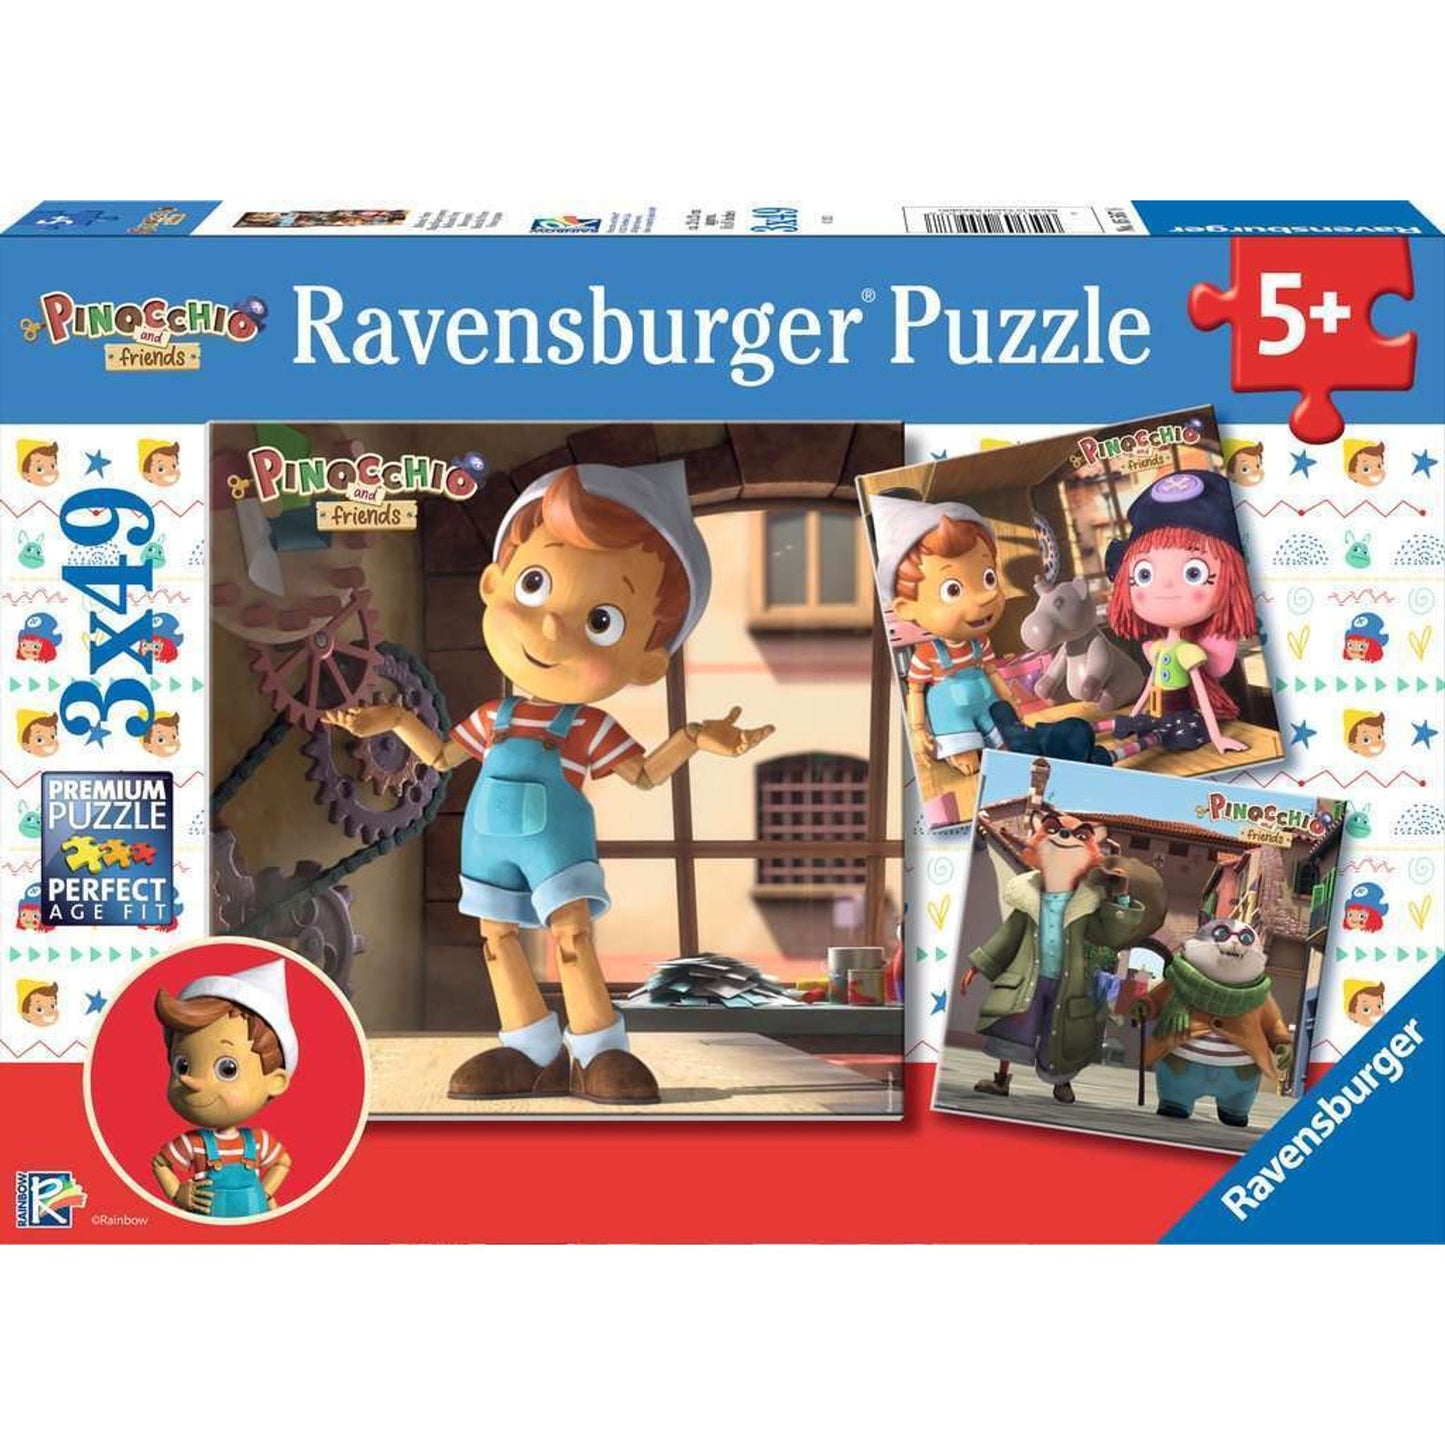 Ravensburger - Pinocchio 3x49pc - Toybox Tales